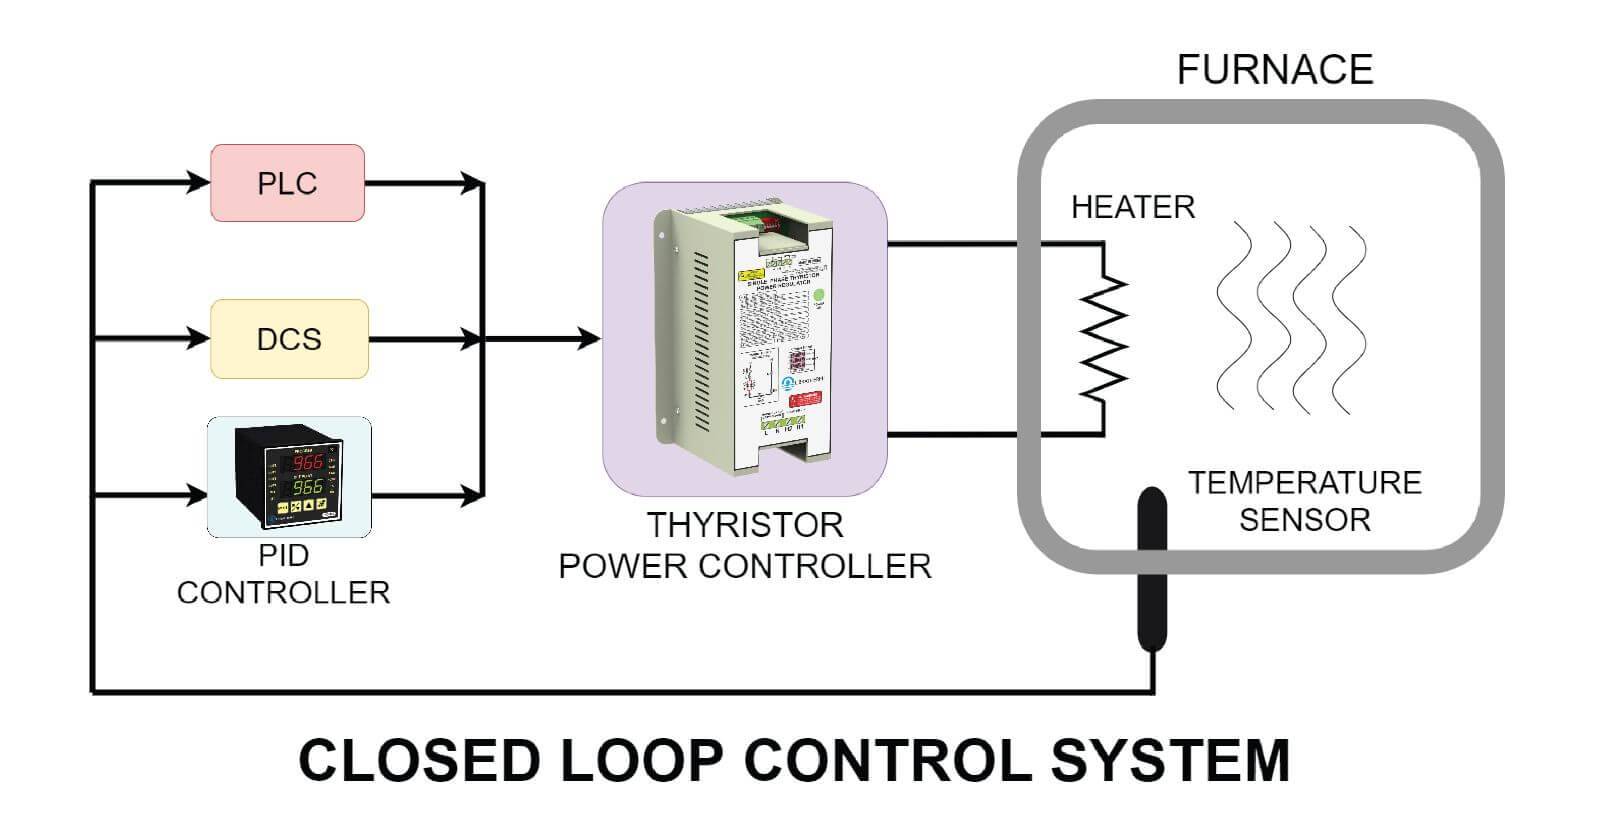 thyristor-power-controller-closed-loop-control-system